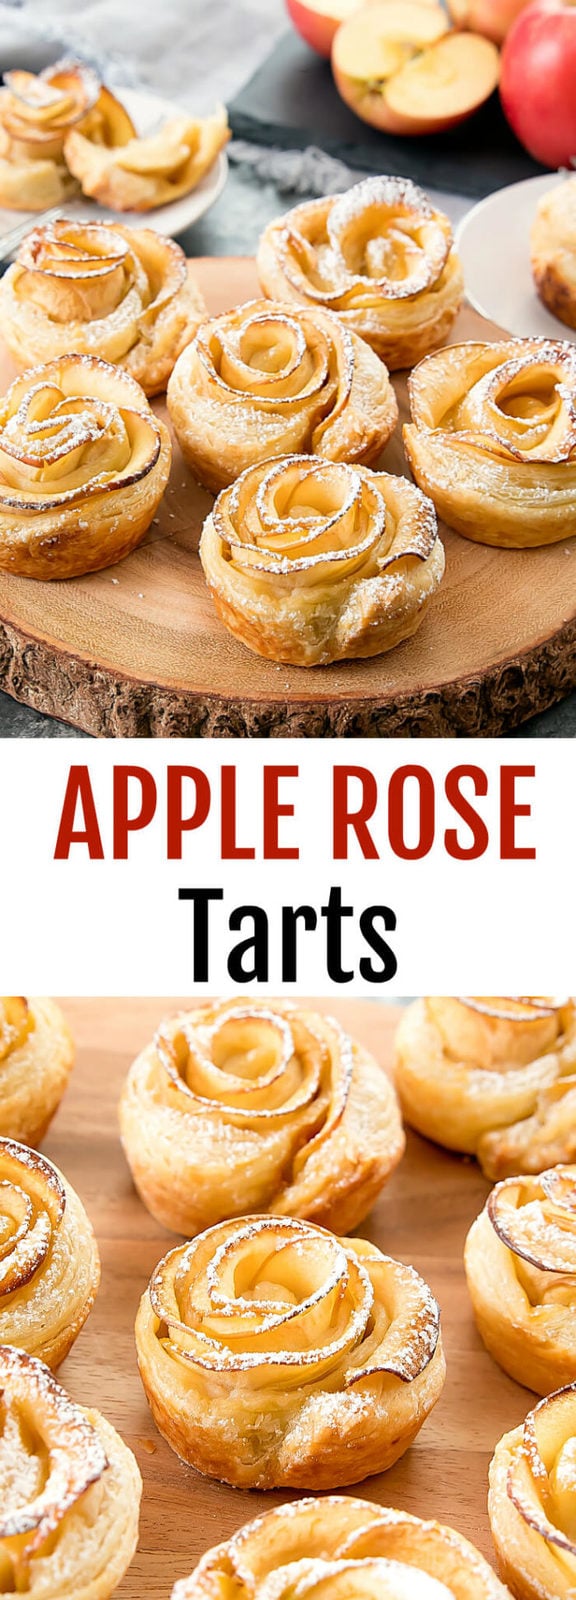 Apple Rose Tarts